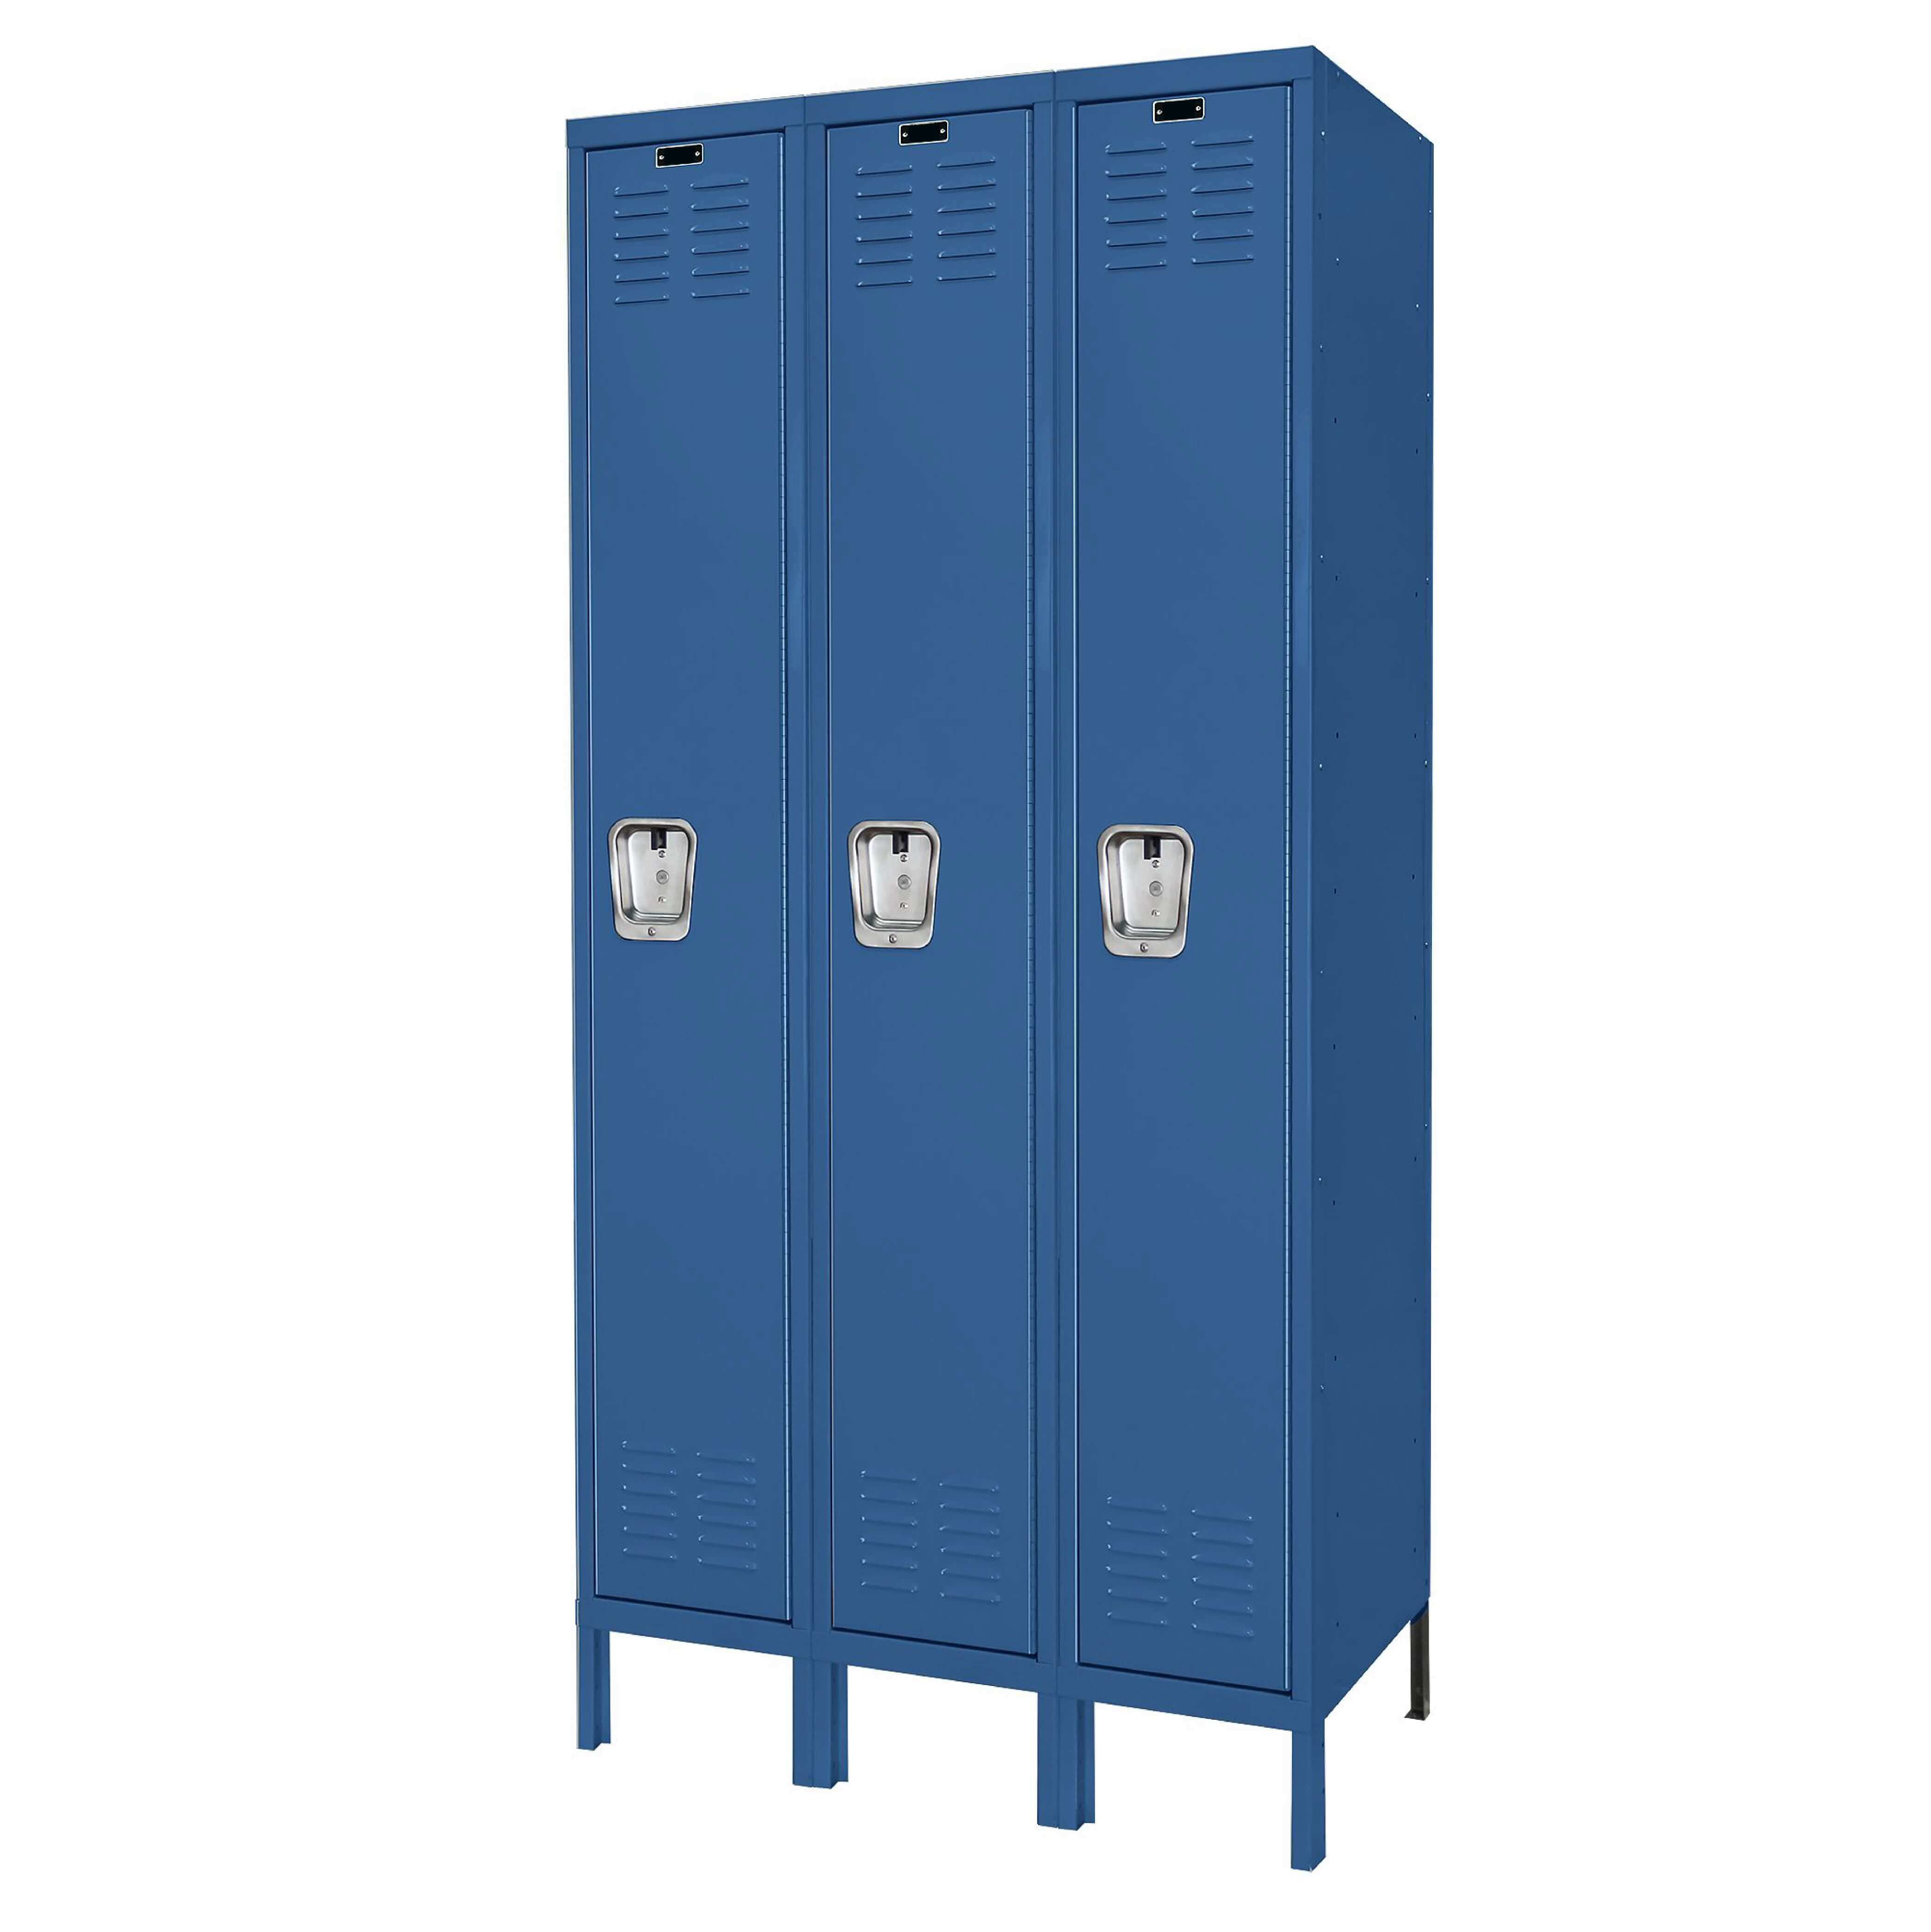 employee-lockers-metal-lockers-patriot-series-wardrobe-lockers-3w-1t-marine-blue-right-angle-view.jpg